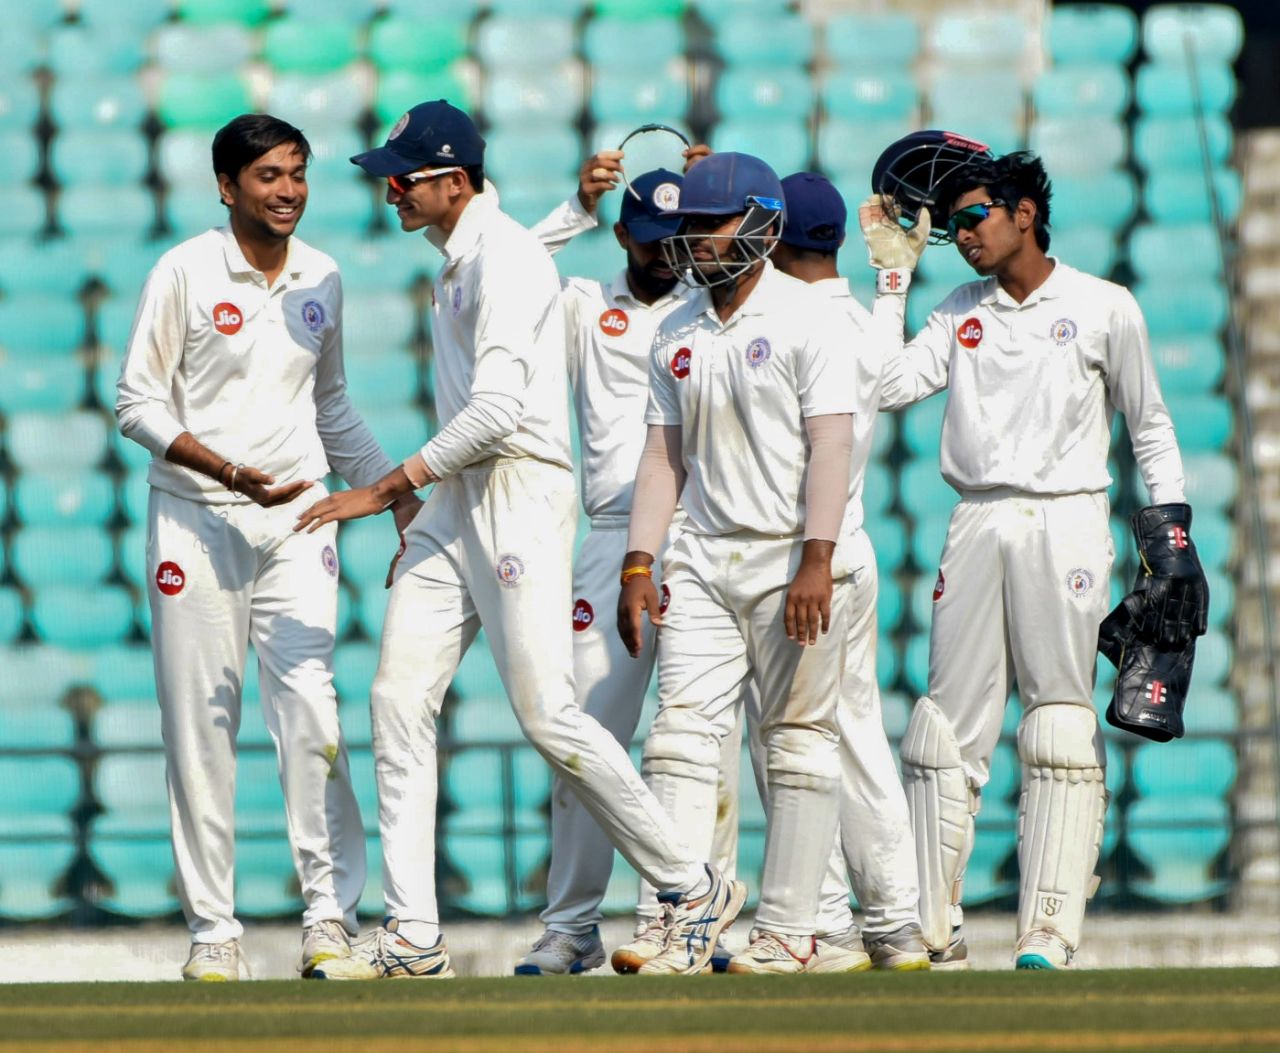 Siddharth Desai picked up six wickets in Vidarbha's second innings, Vidarbha vs Gujarat, Nagpur, 2nd day, January 18, 2023